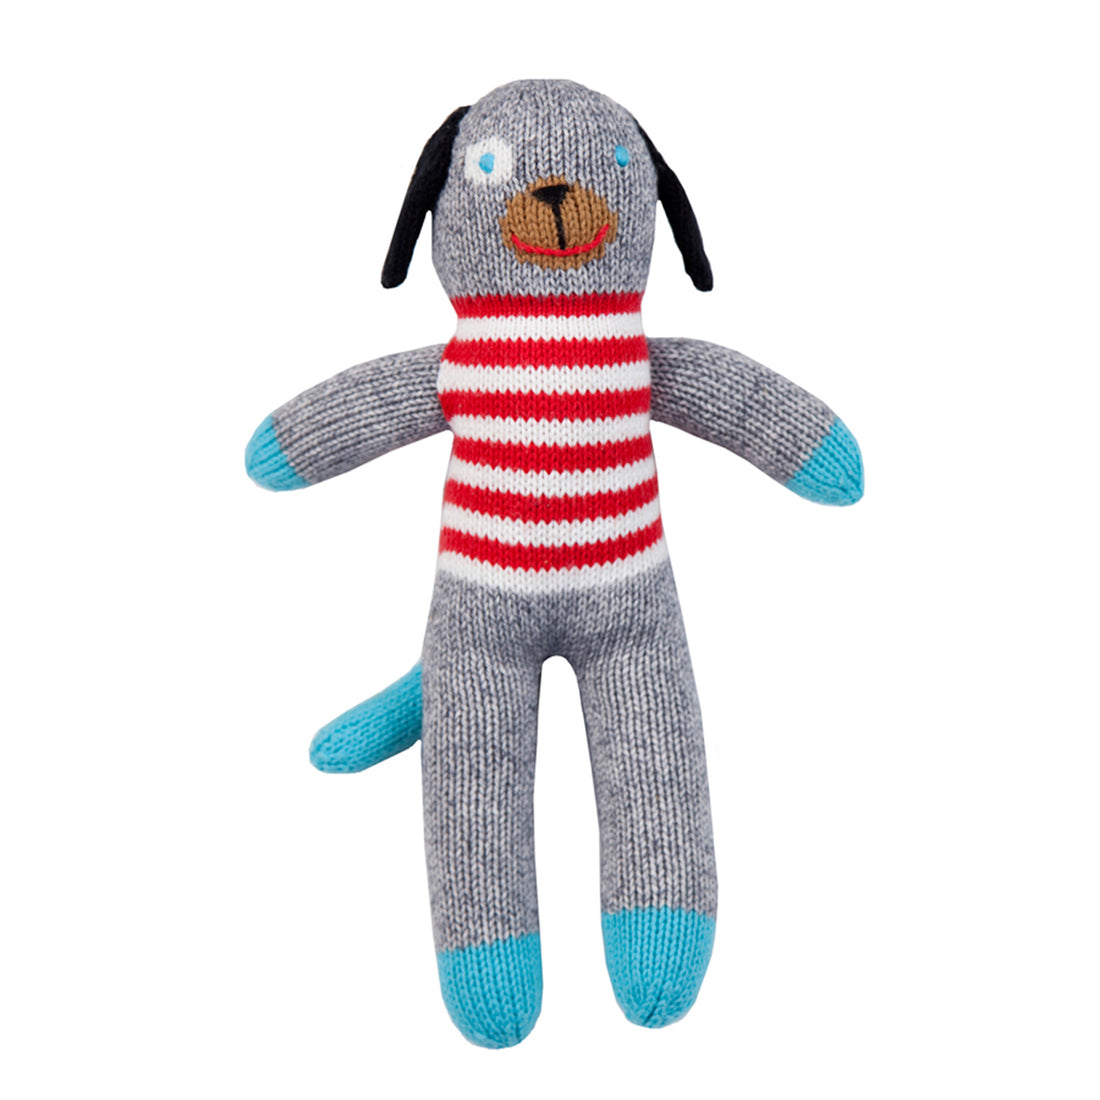 blabla-kids-andiamo-the-dog-play-hug-plushy-baby-kid-knit-doll-blab-105034-01